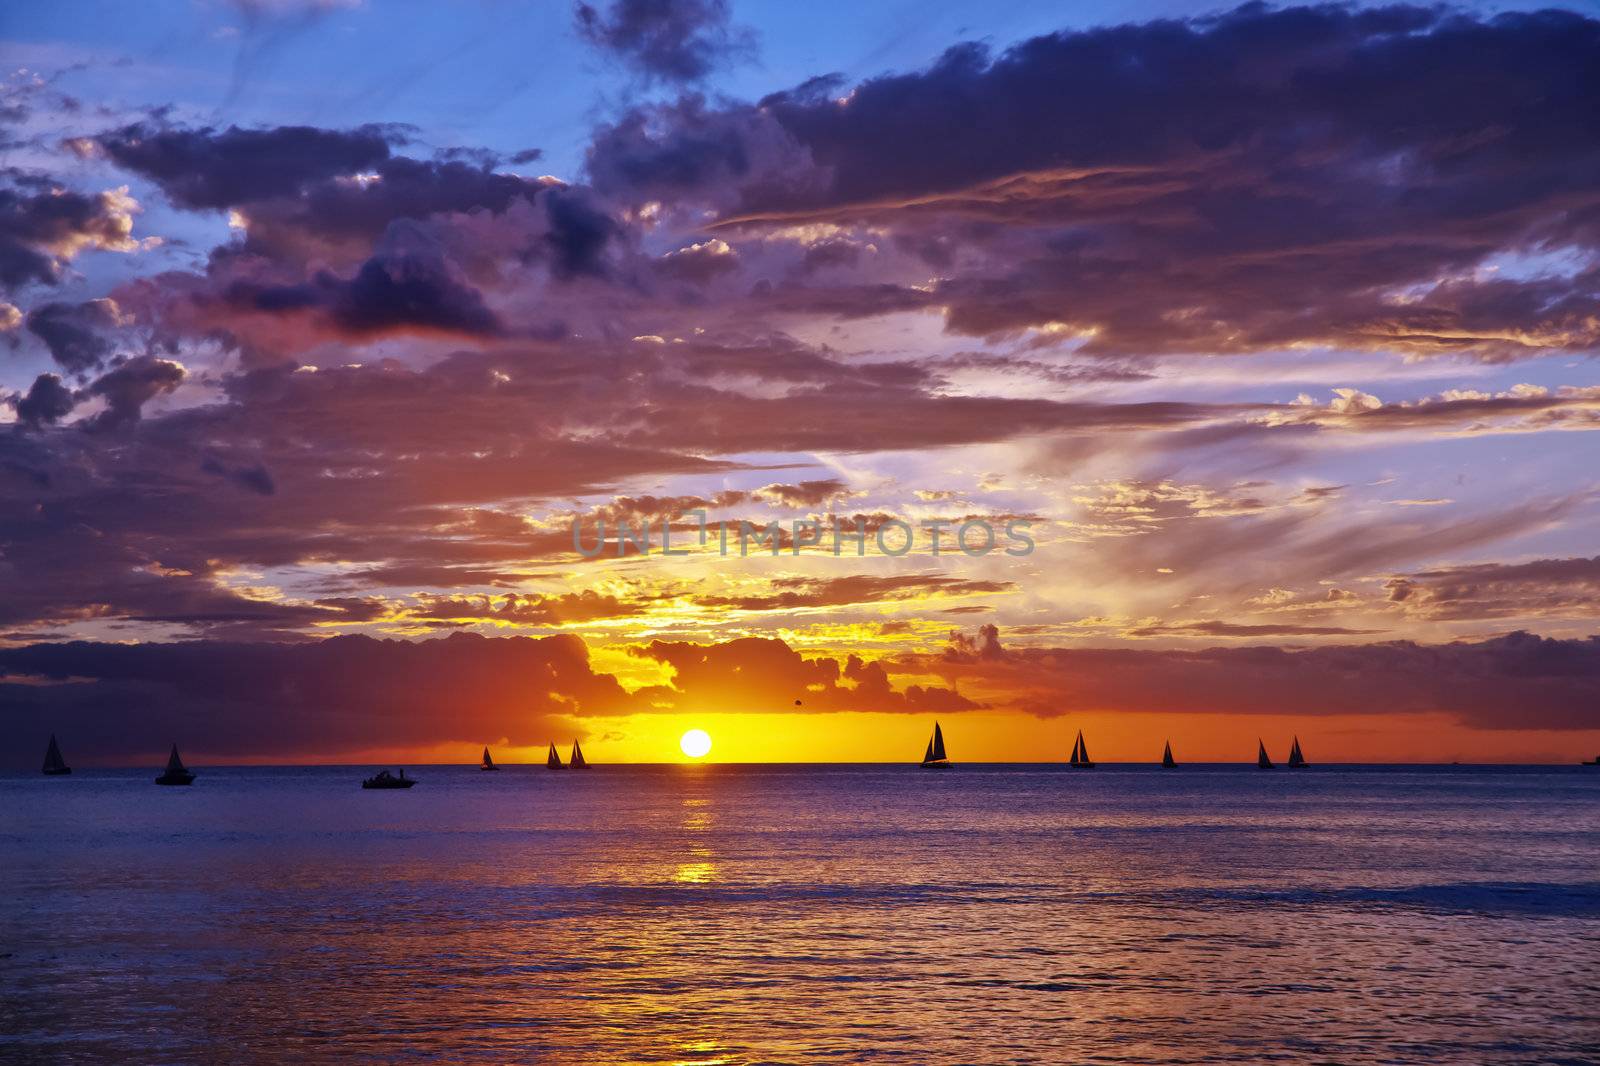 Sunset in Honolulu as viewed from Waikiki beach